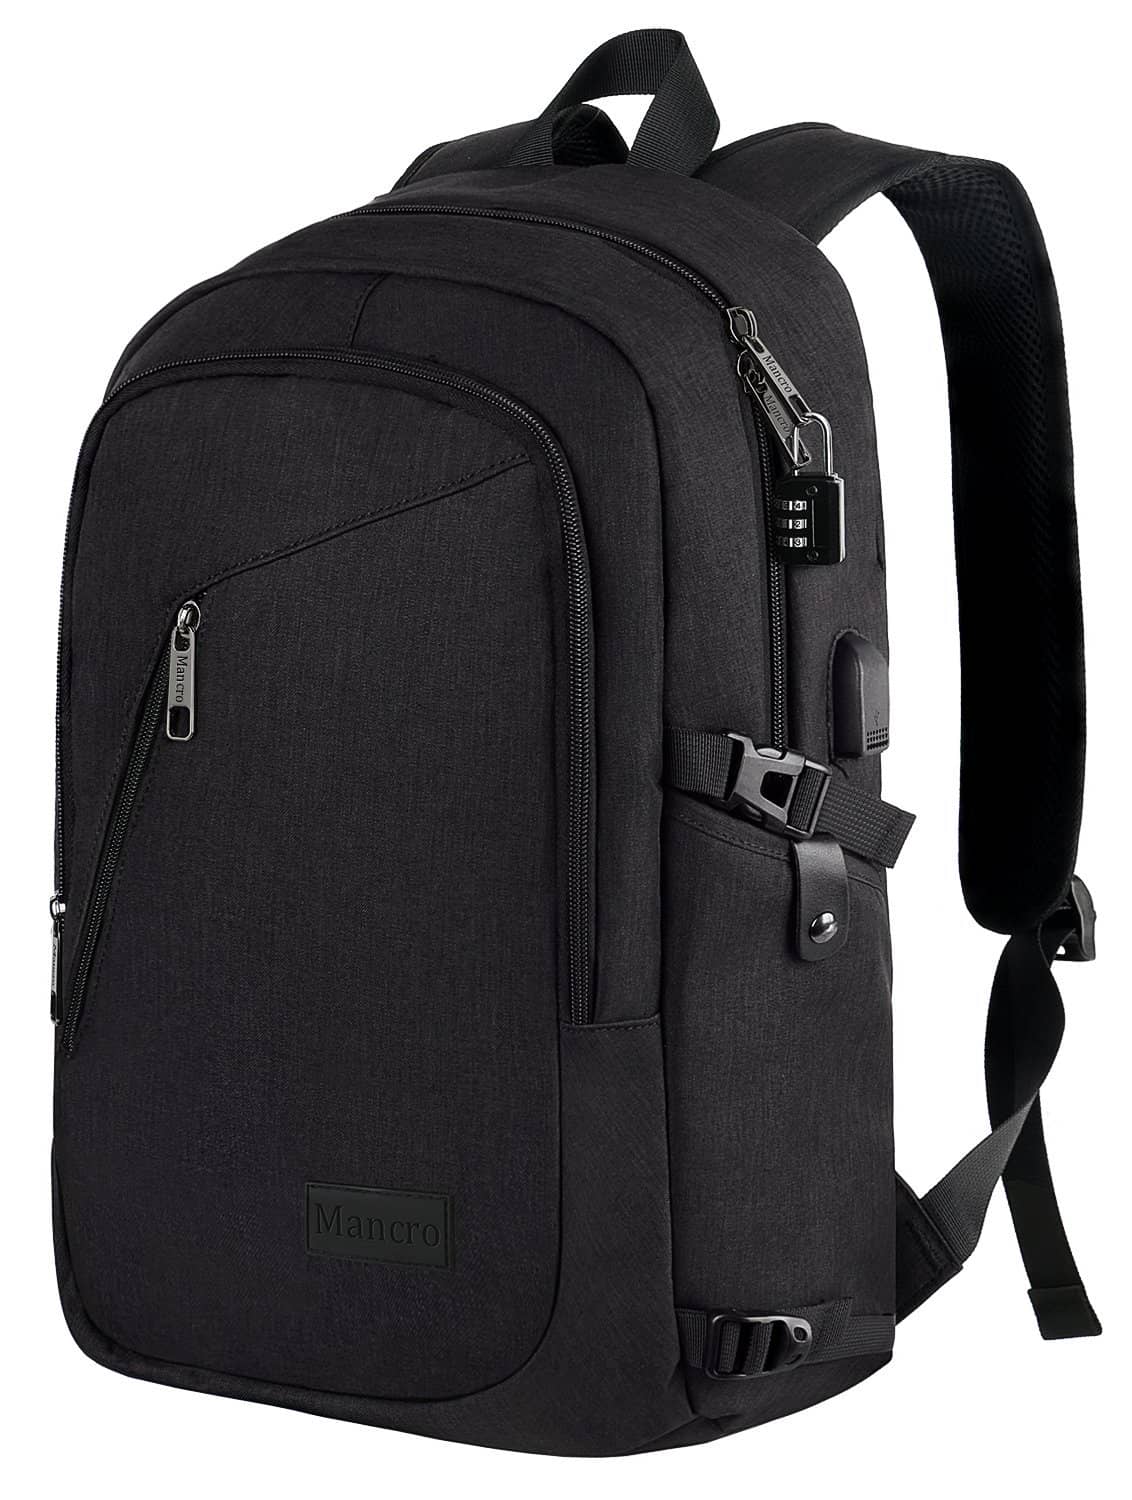 travel backpack for work